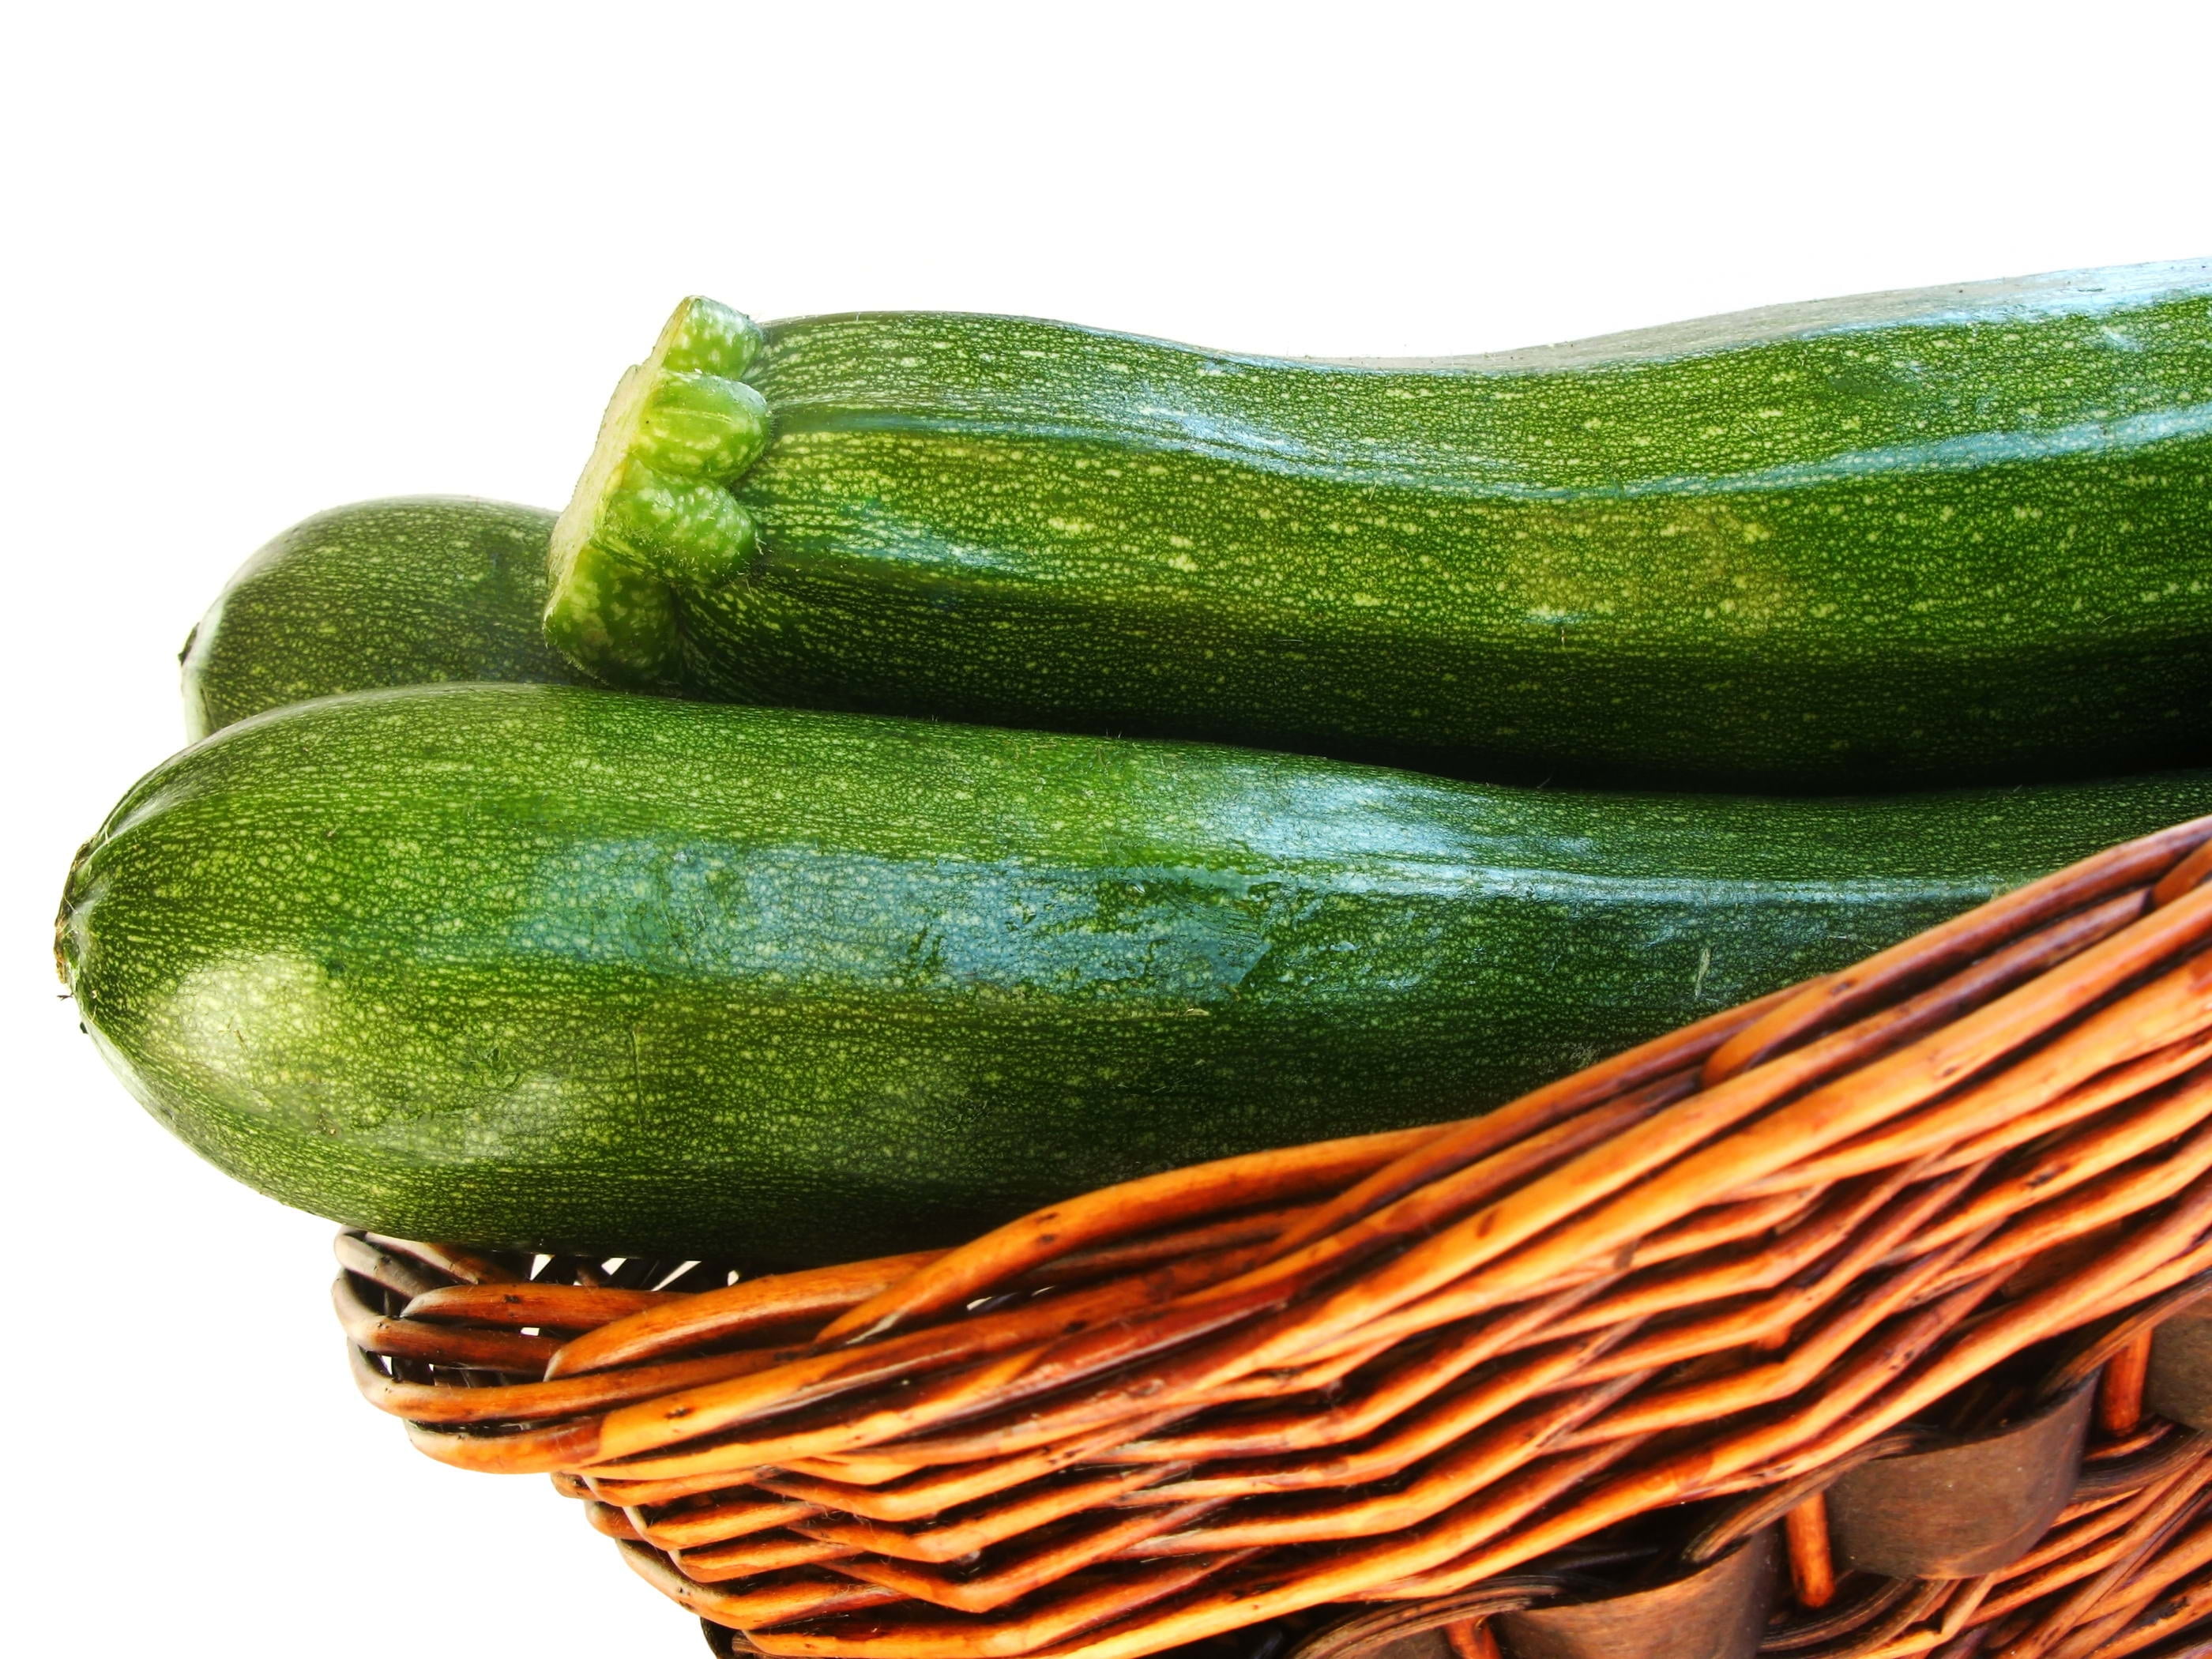 three green cucumbers, squash, basket, white background, vegetable